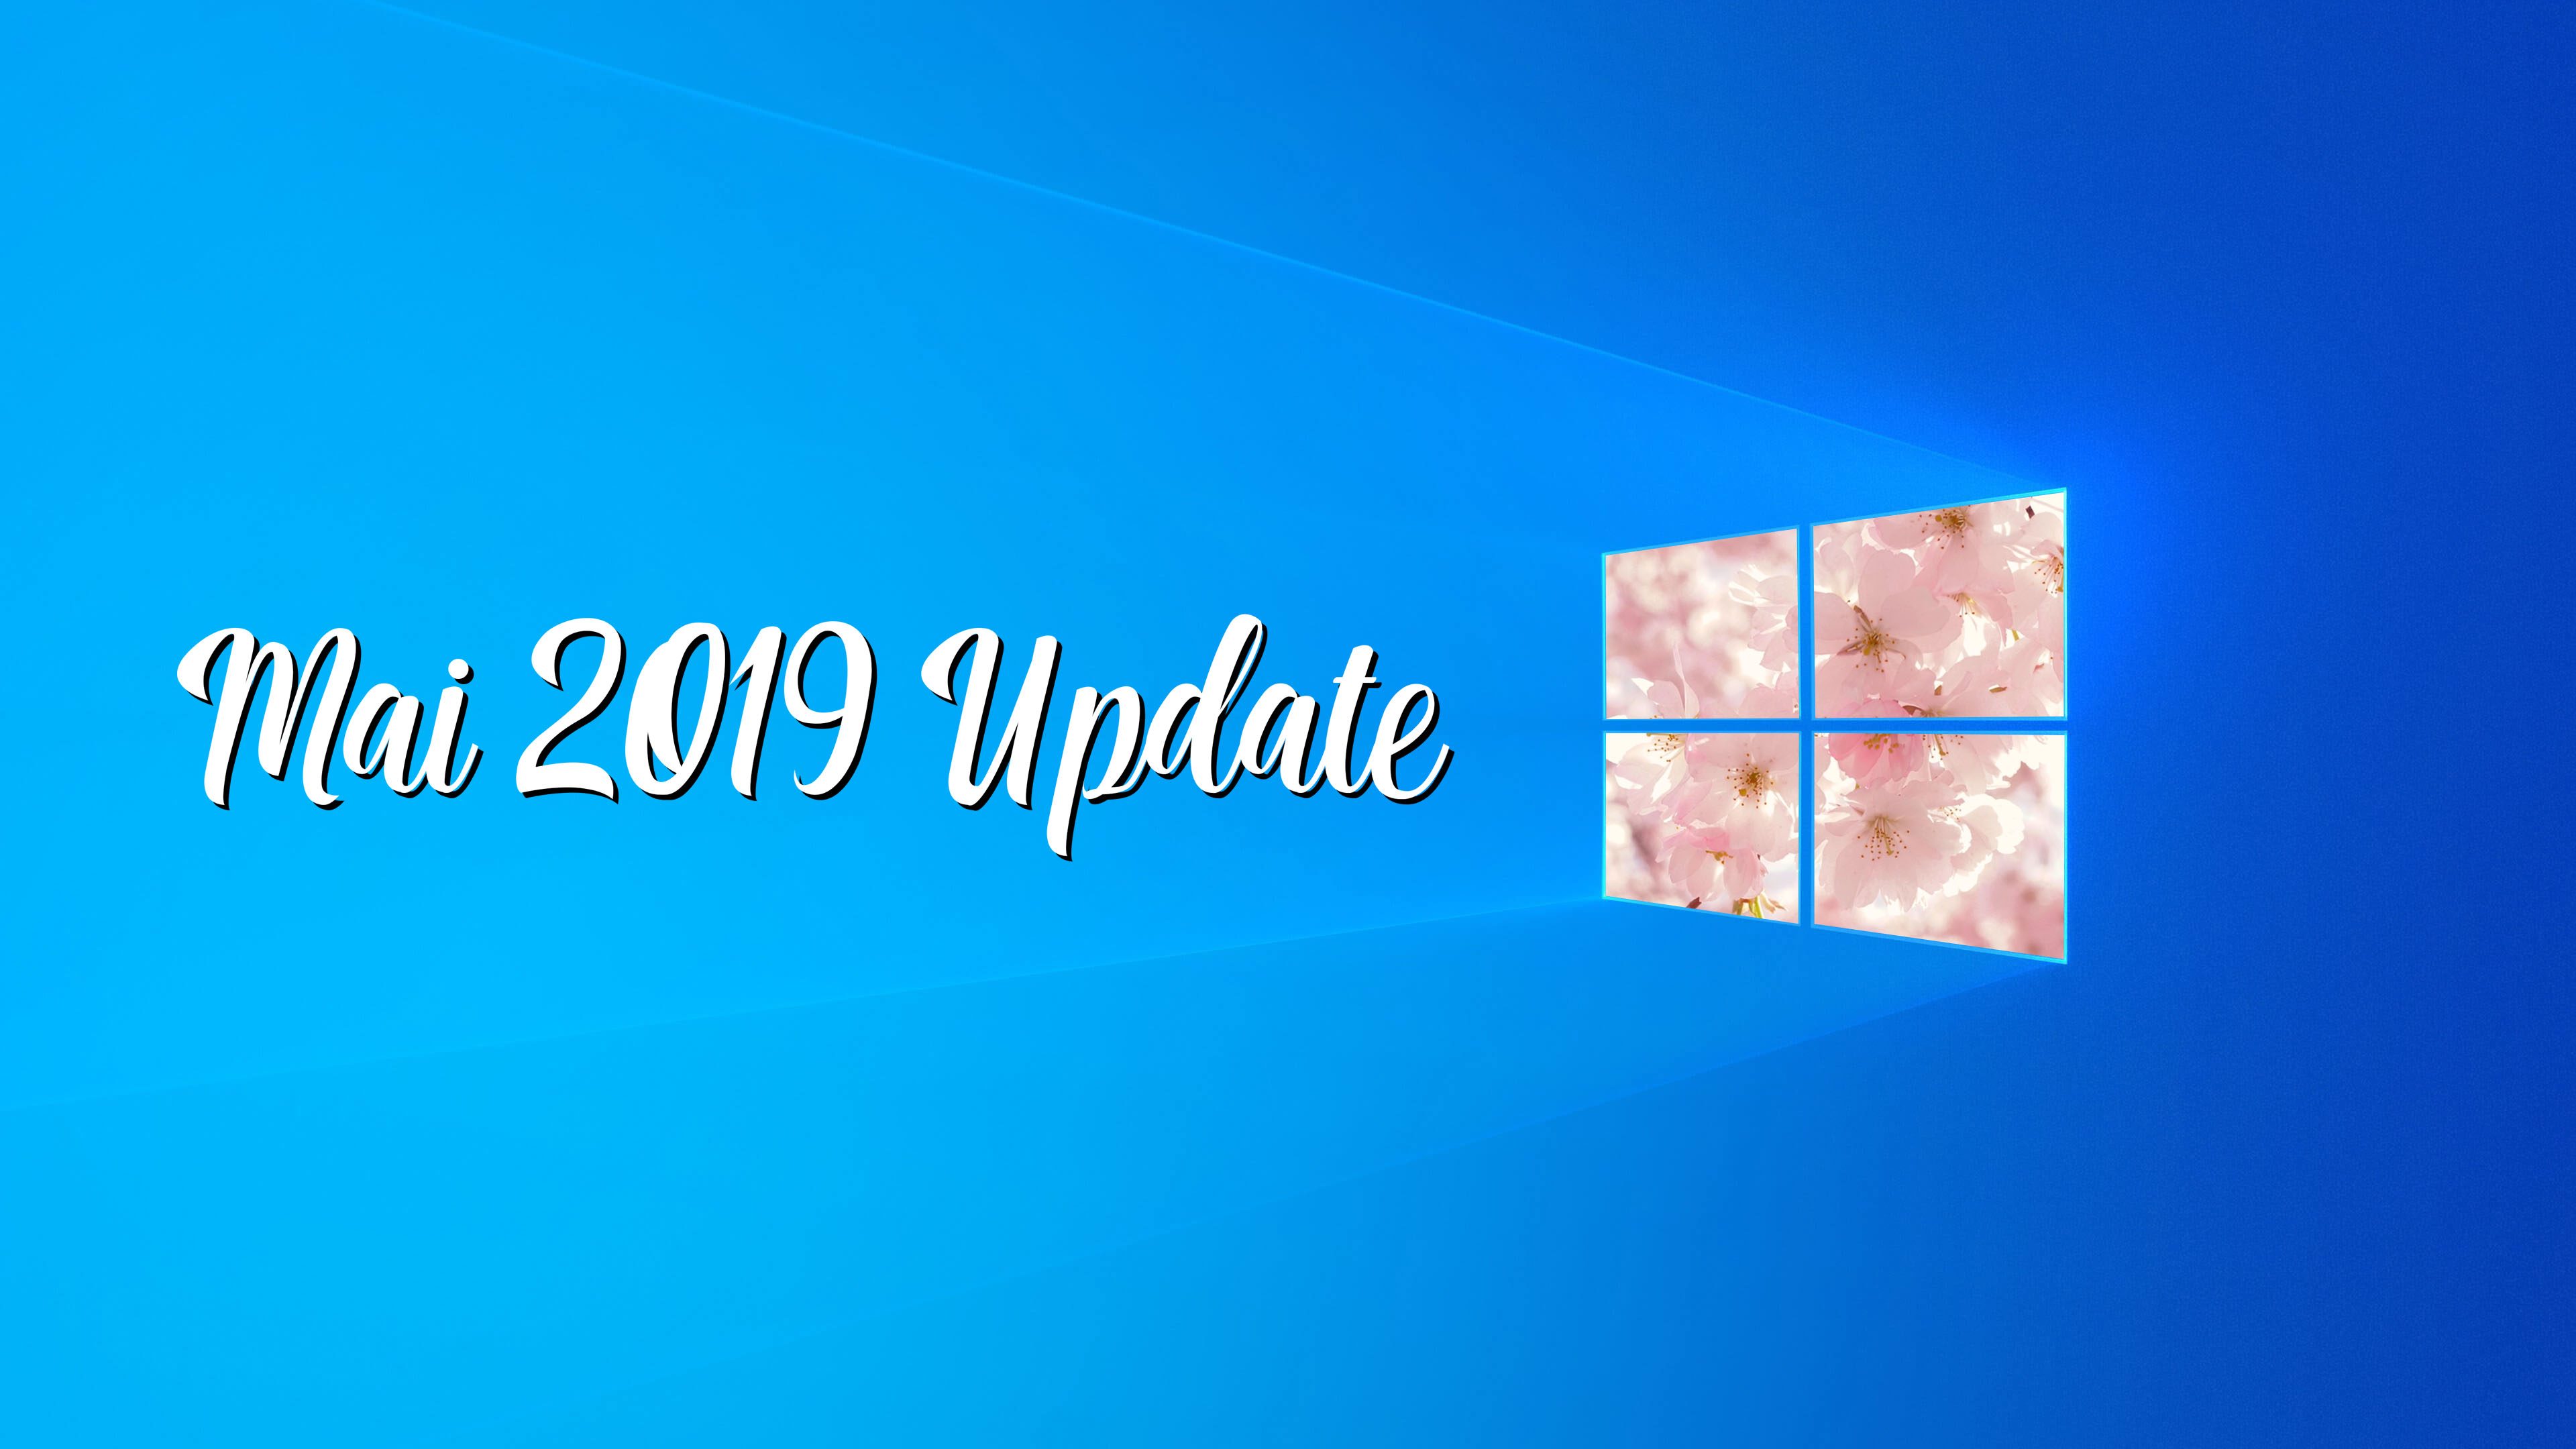 Anleitung: Windows 10 Mai 2019 Update jetzt schon installieren